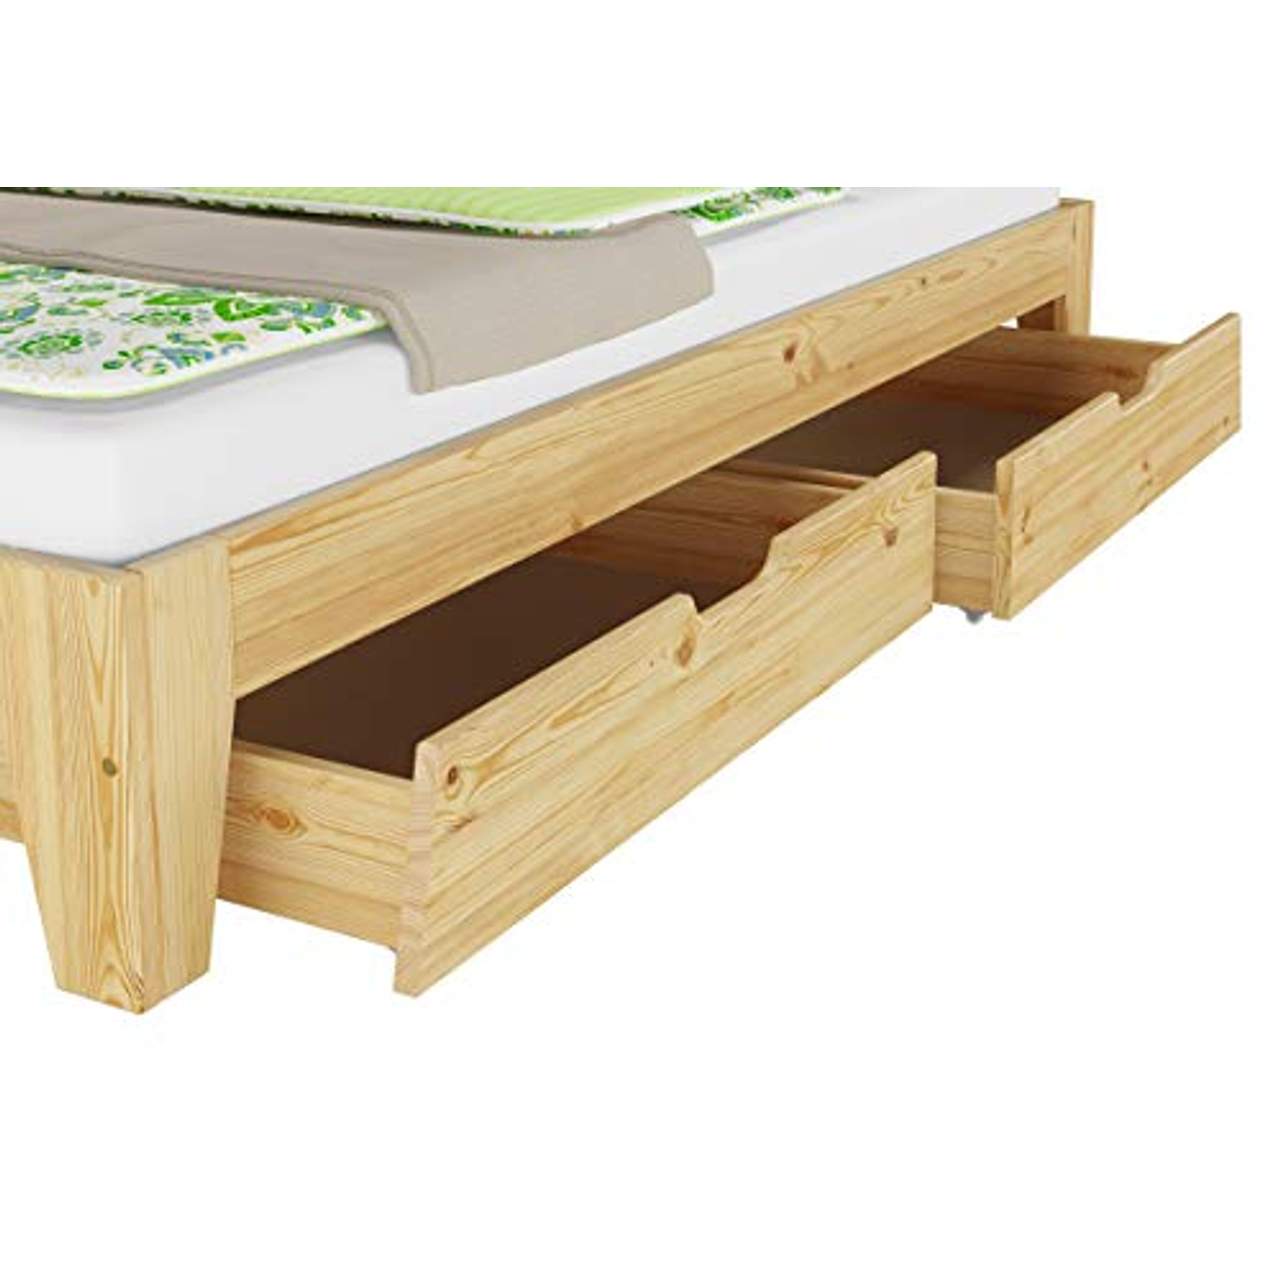 Erst-Holz Doppelbett mit Durchgehender Matratze 180x200 Ehebett Massivholz Kieferbett